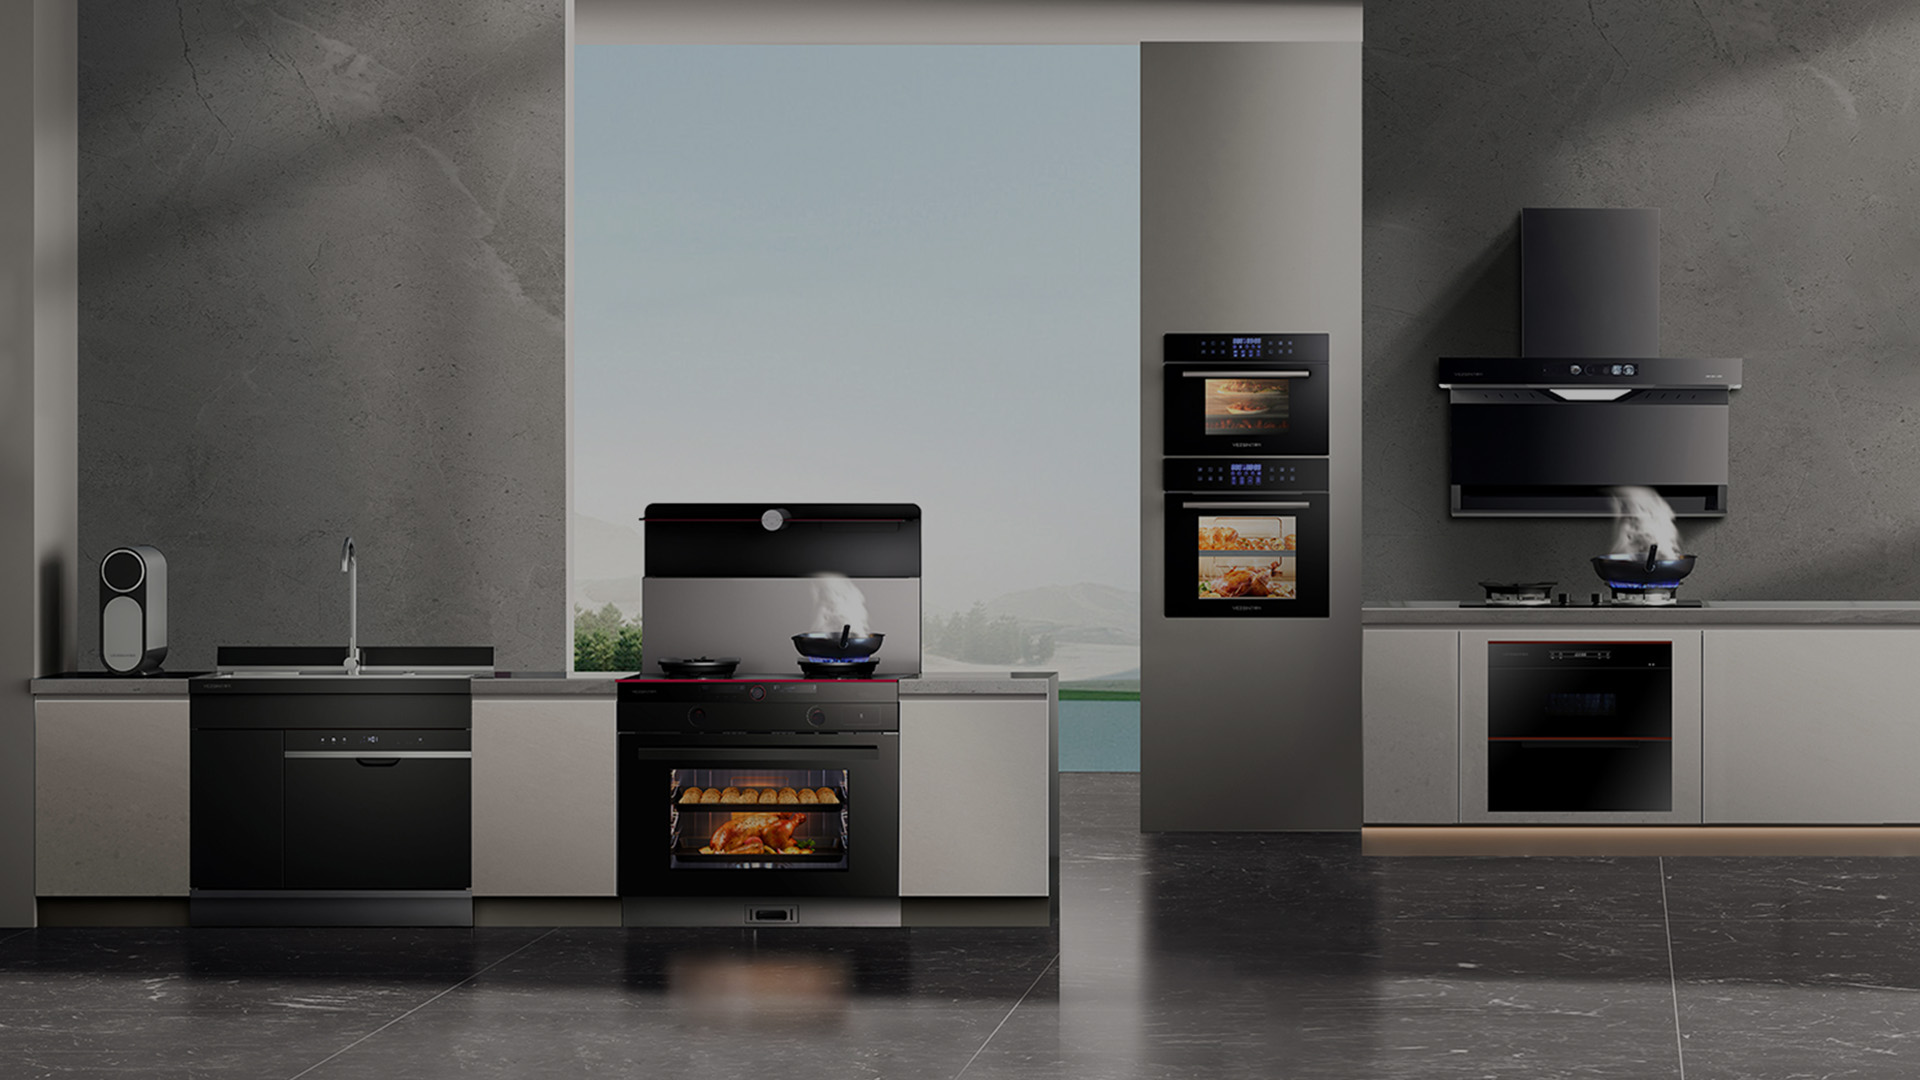 Split integrated stove